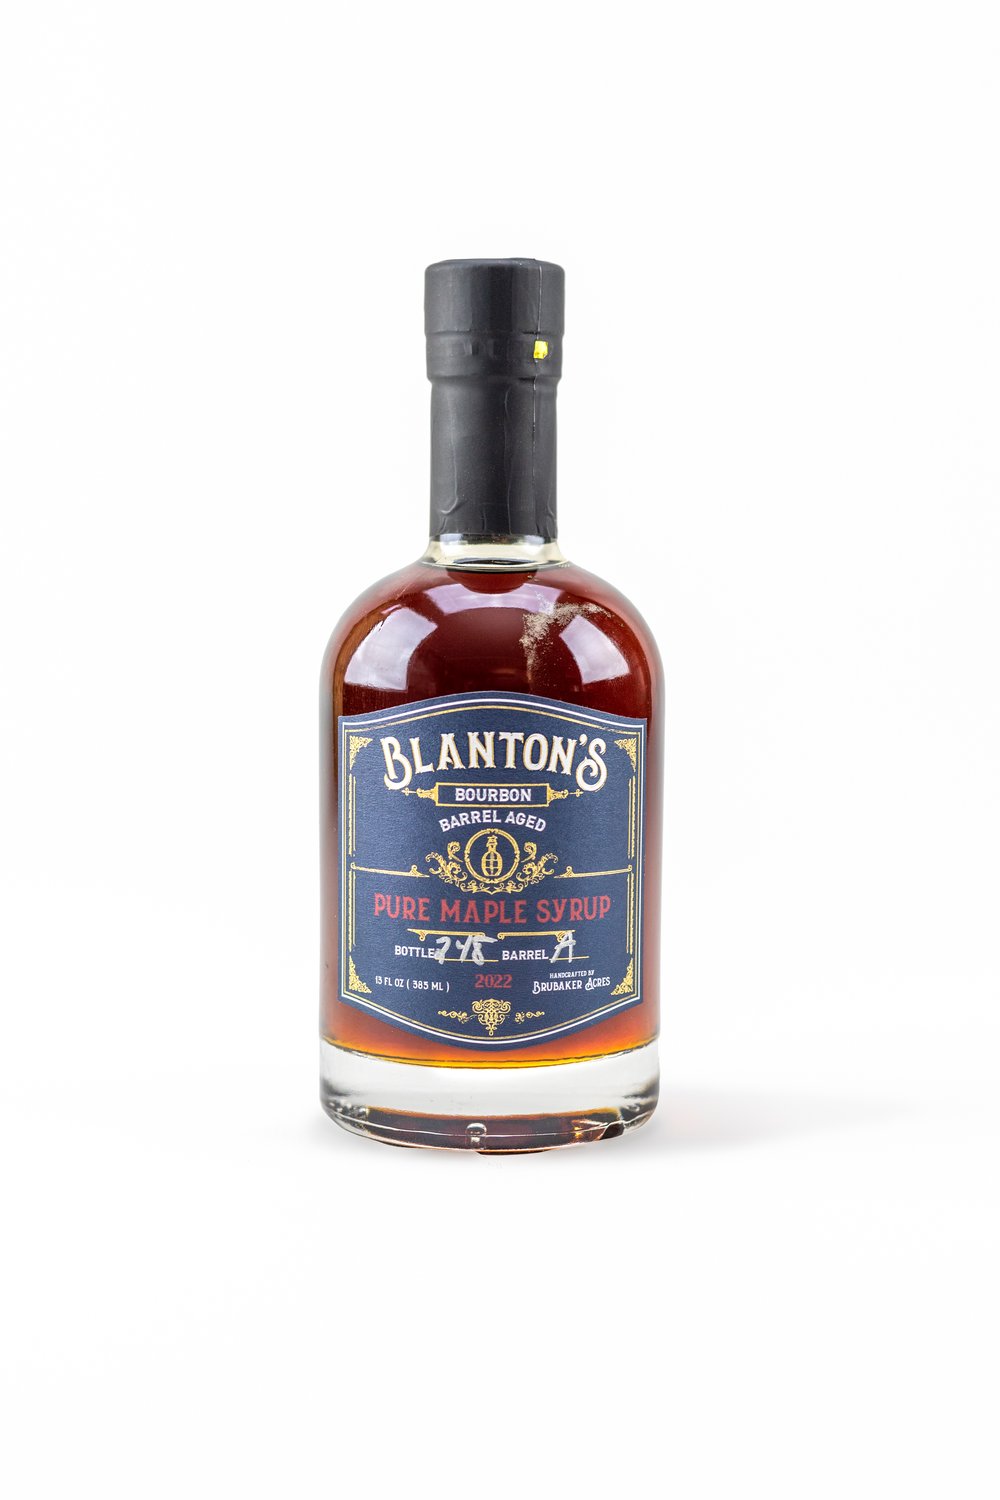 Blanton's Coffee — The Official Blanton's Bourbon Shop